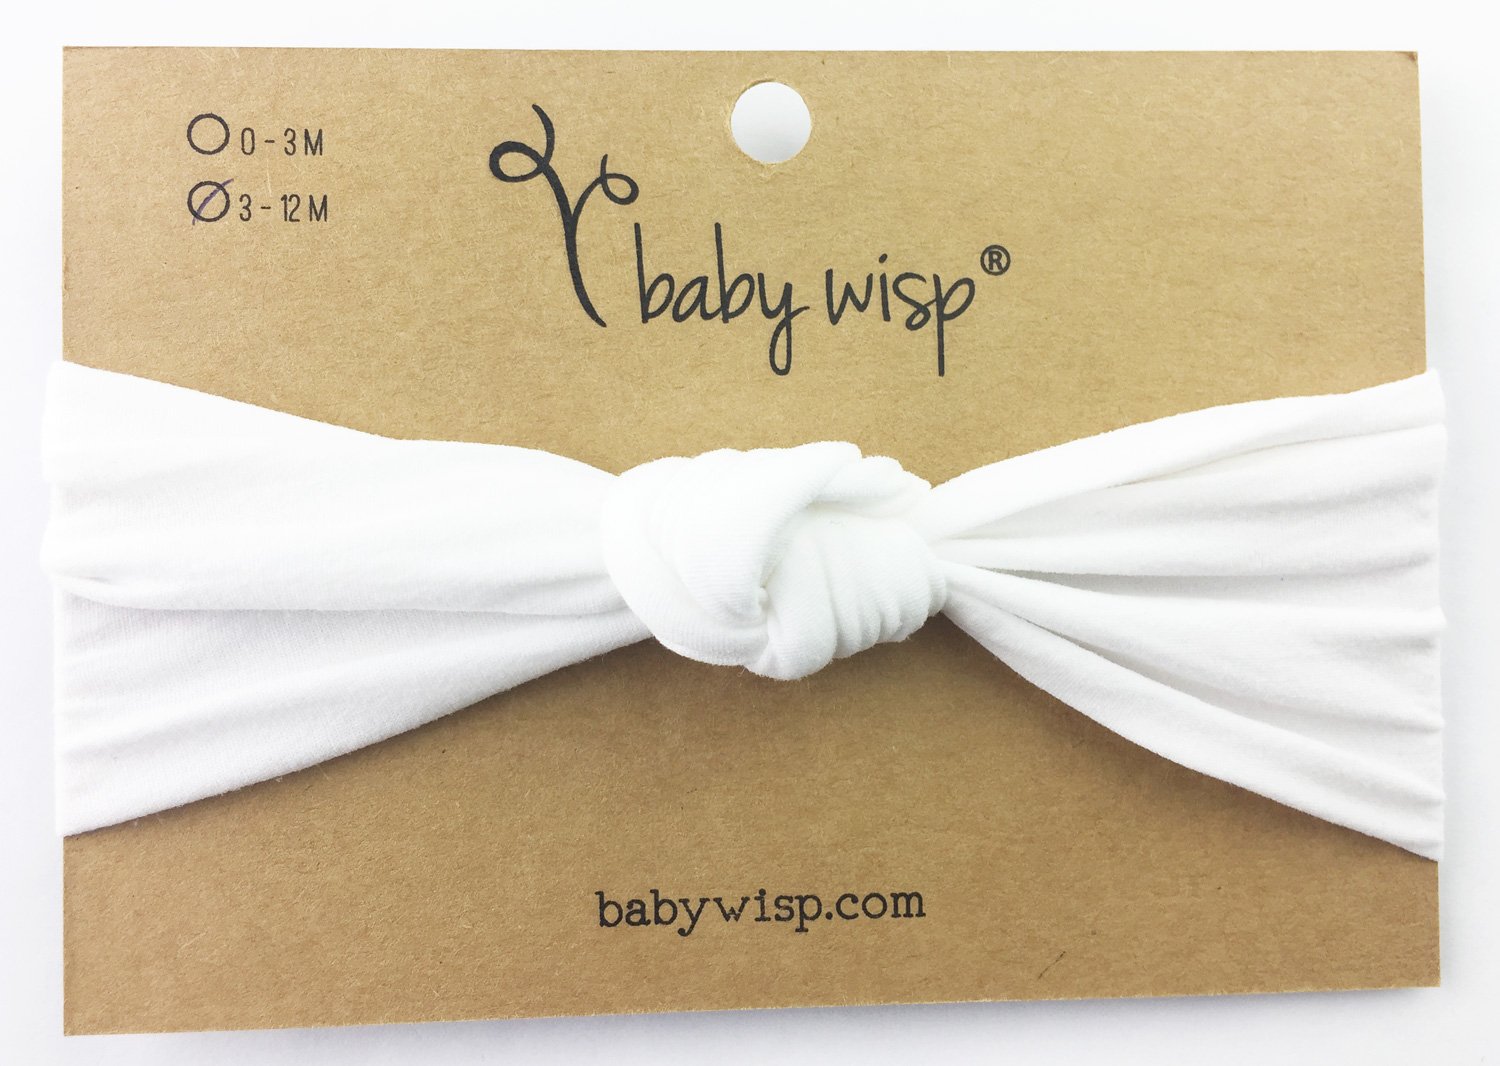 Infant Headwrap - Turban Knot Headband Baby Wisp